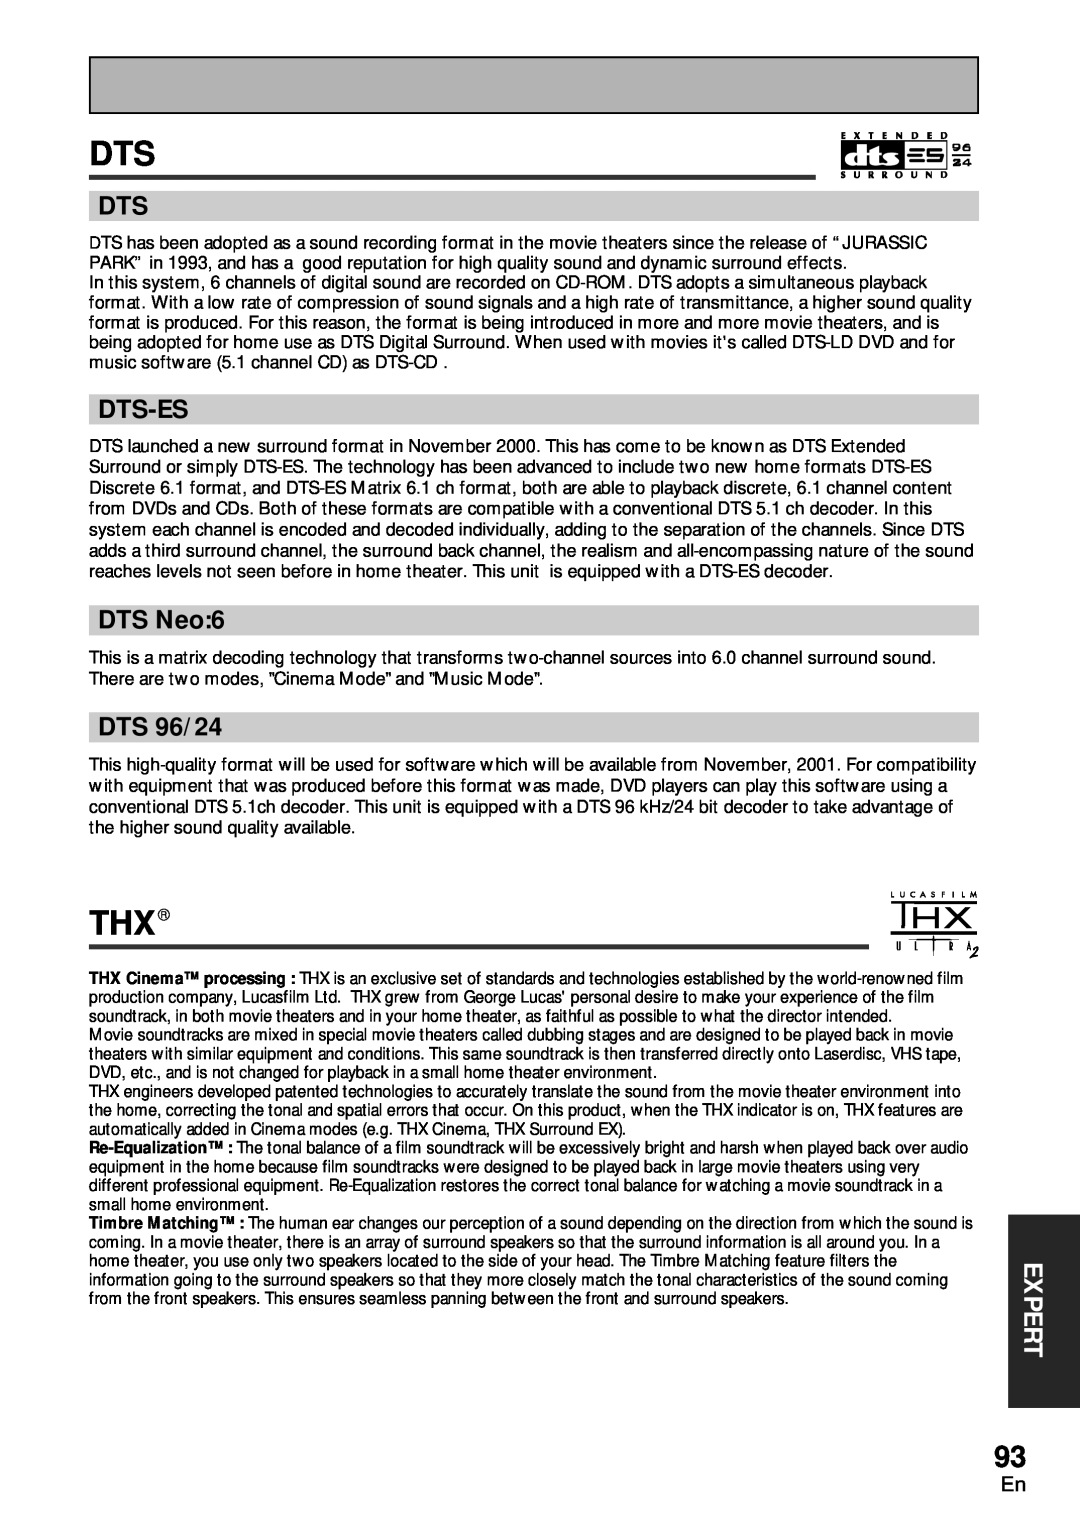 Pioneer VSA-AX10 operating instructions Thx, Dts-Es, DTS Neo:6, DTS 96/24 